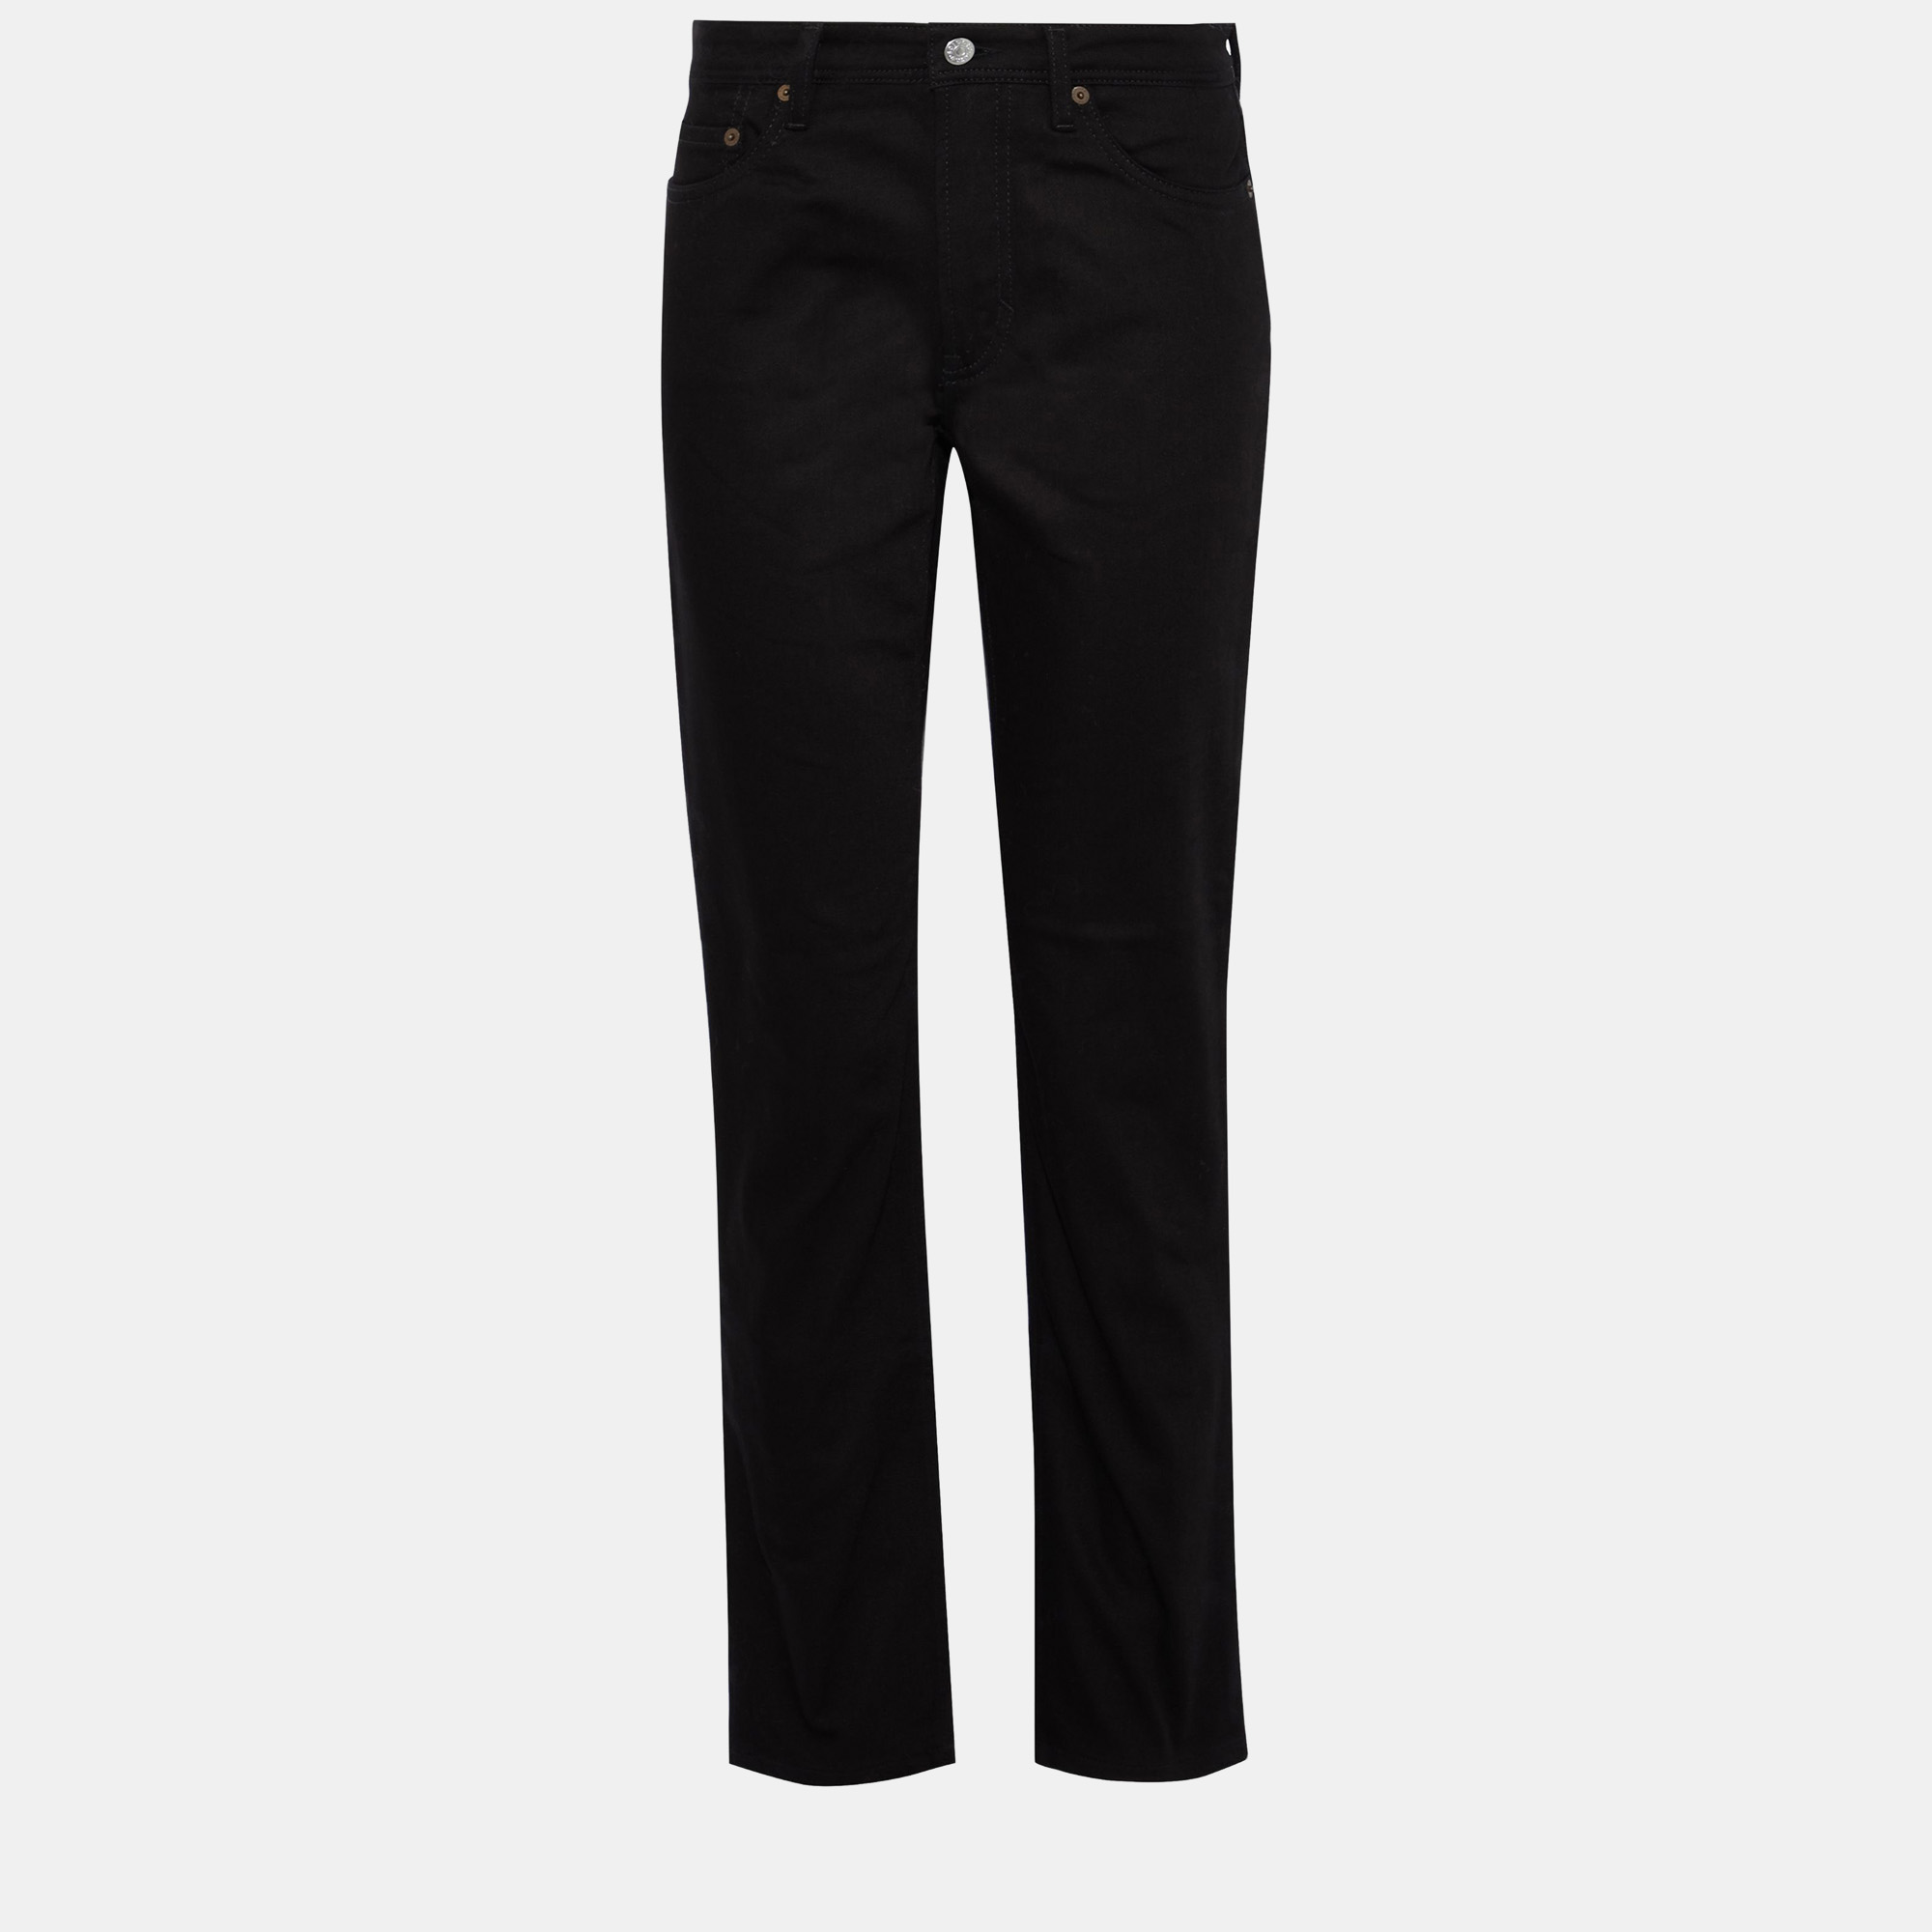 Acne studios cotton straight leg jeans 28w-32l